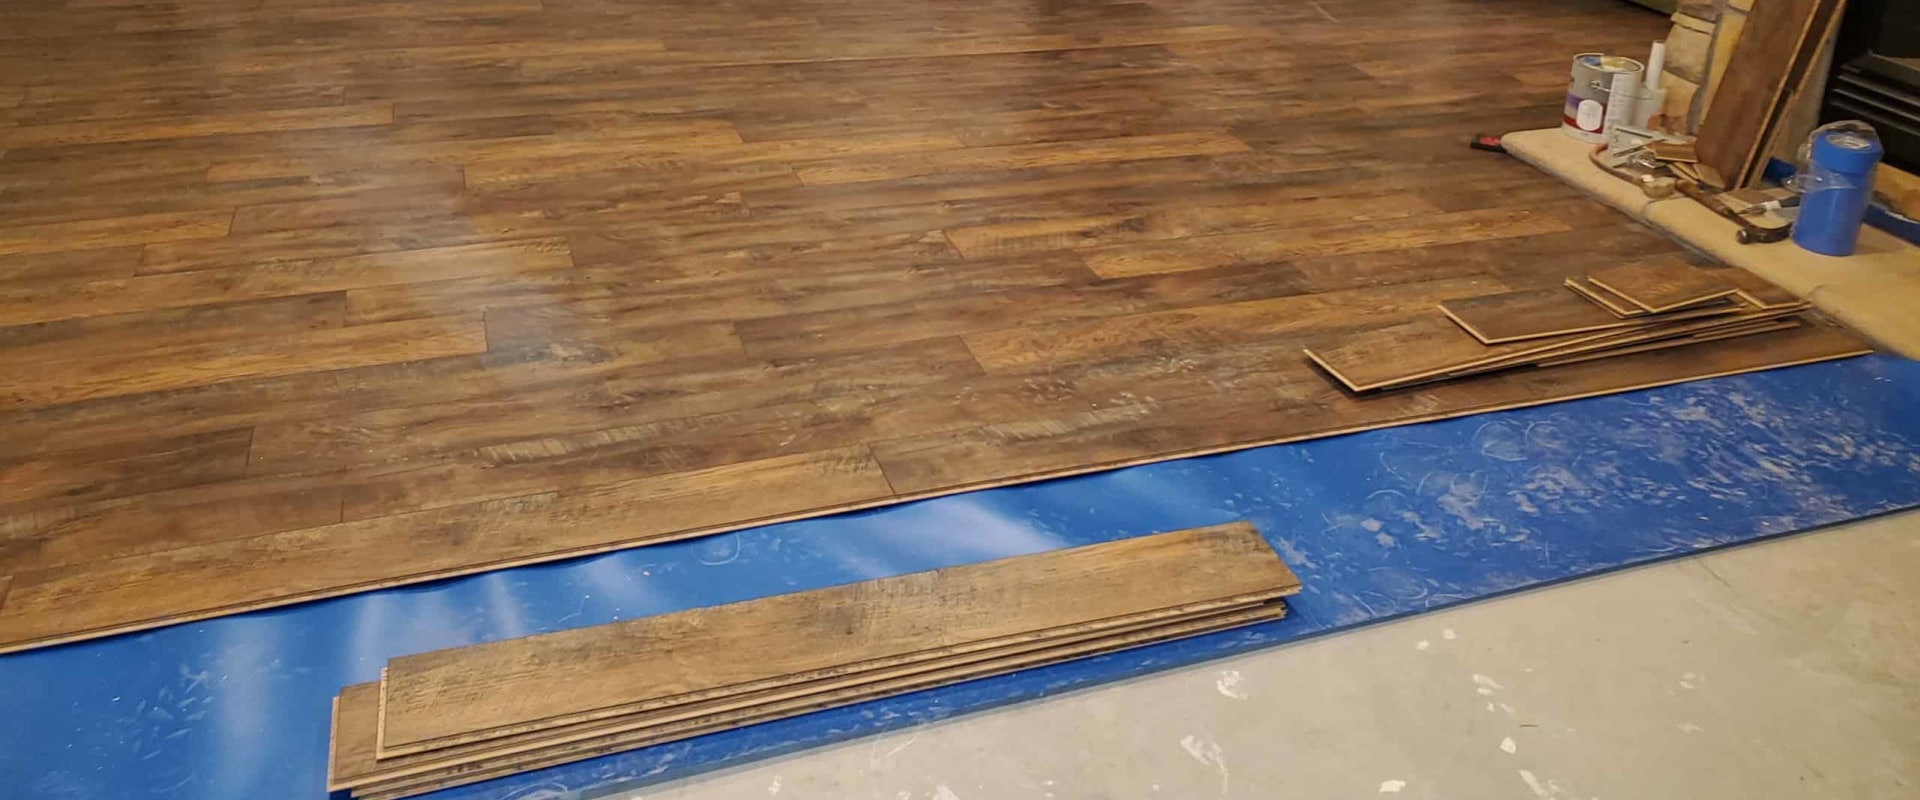 Do I Need Underlayment for Laminate Flooring?